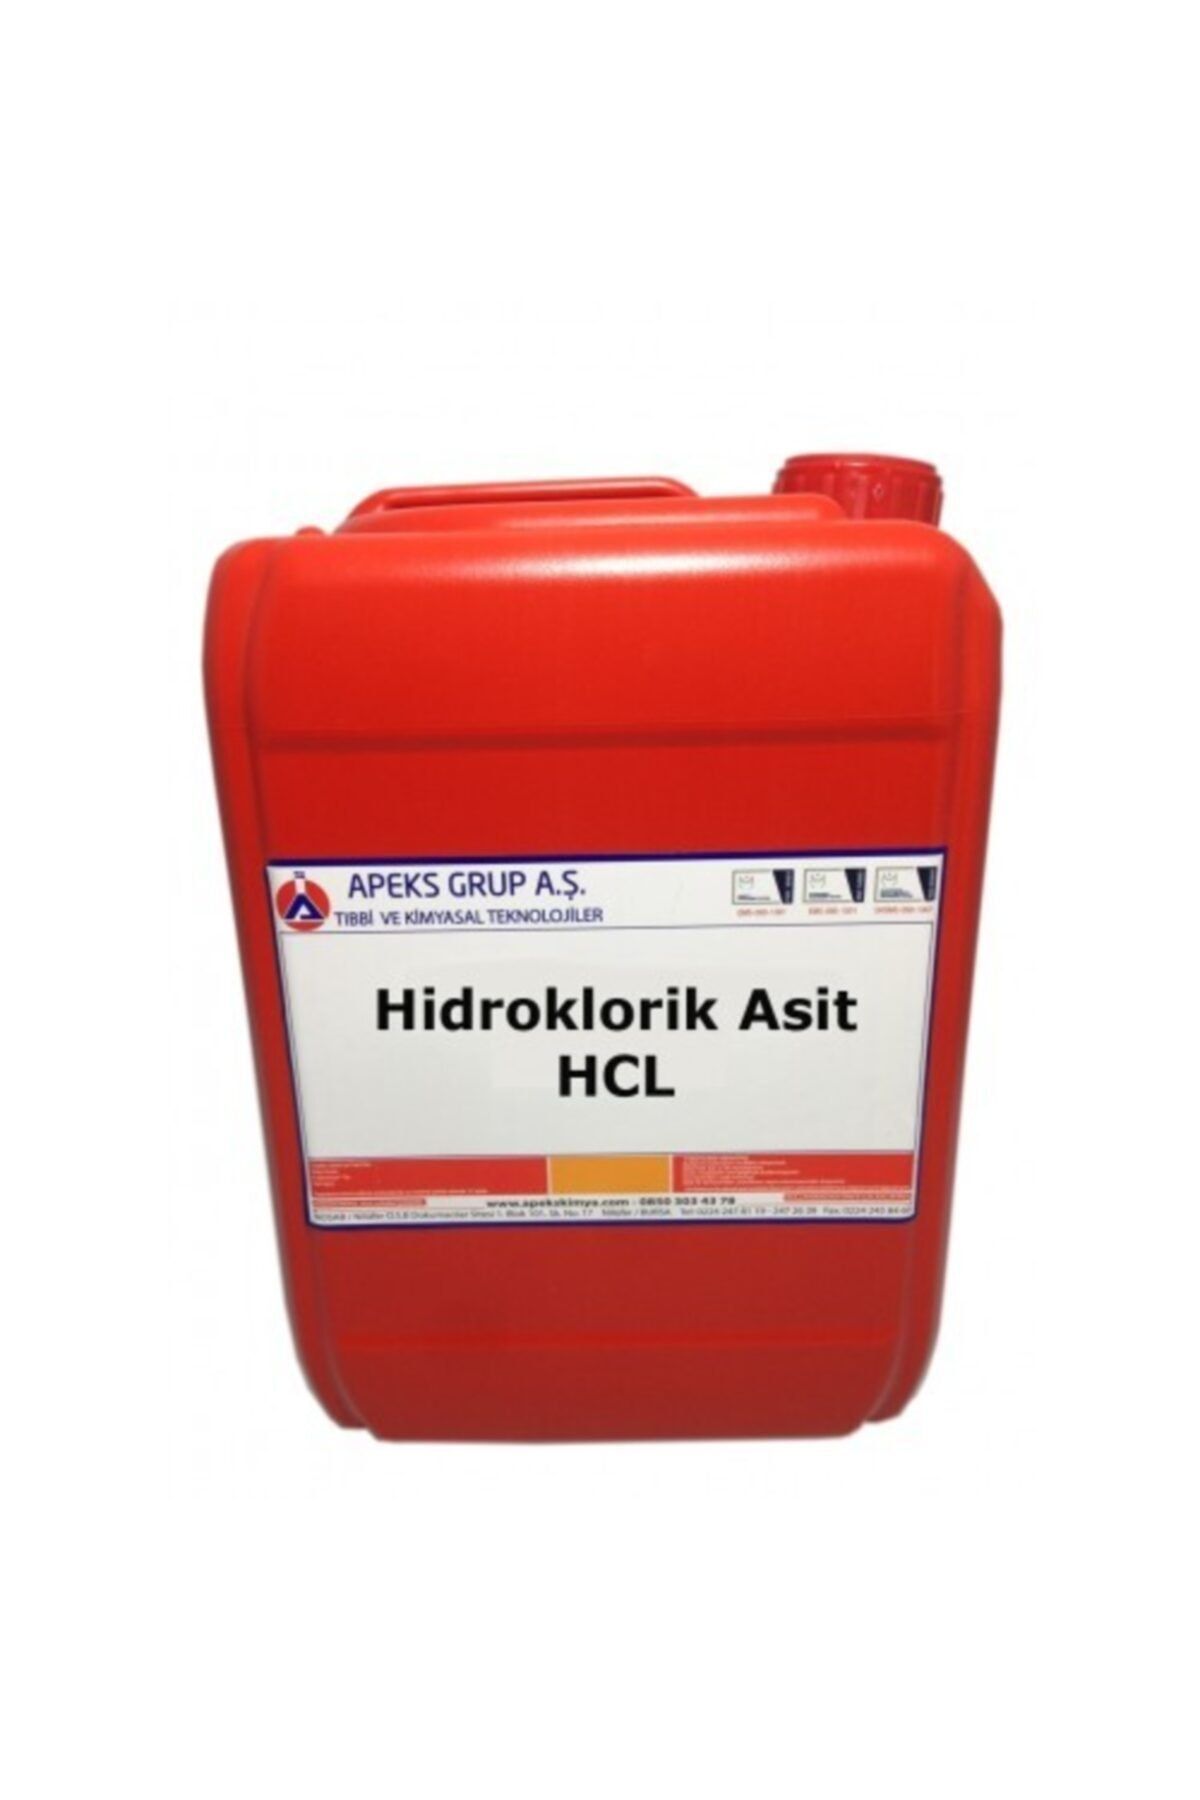 APEKS Hidroklorik Asit - Hcl % 30-32 - 10 kg